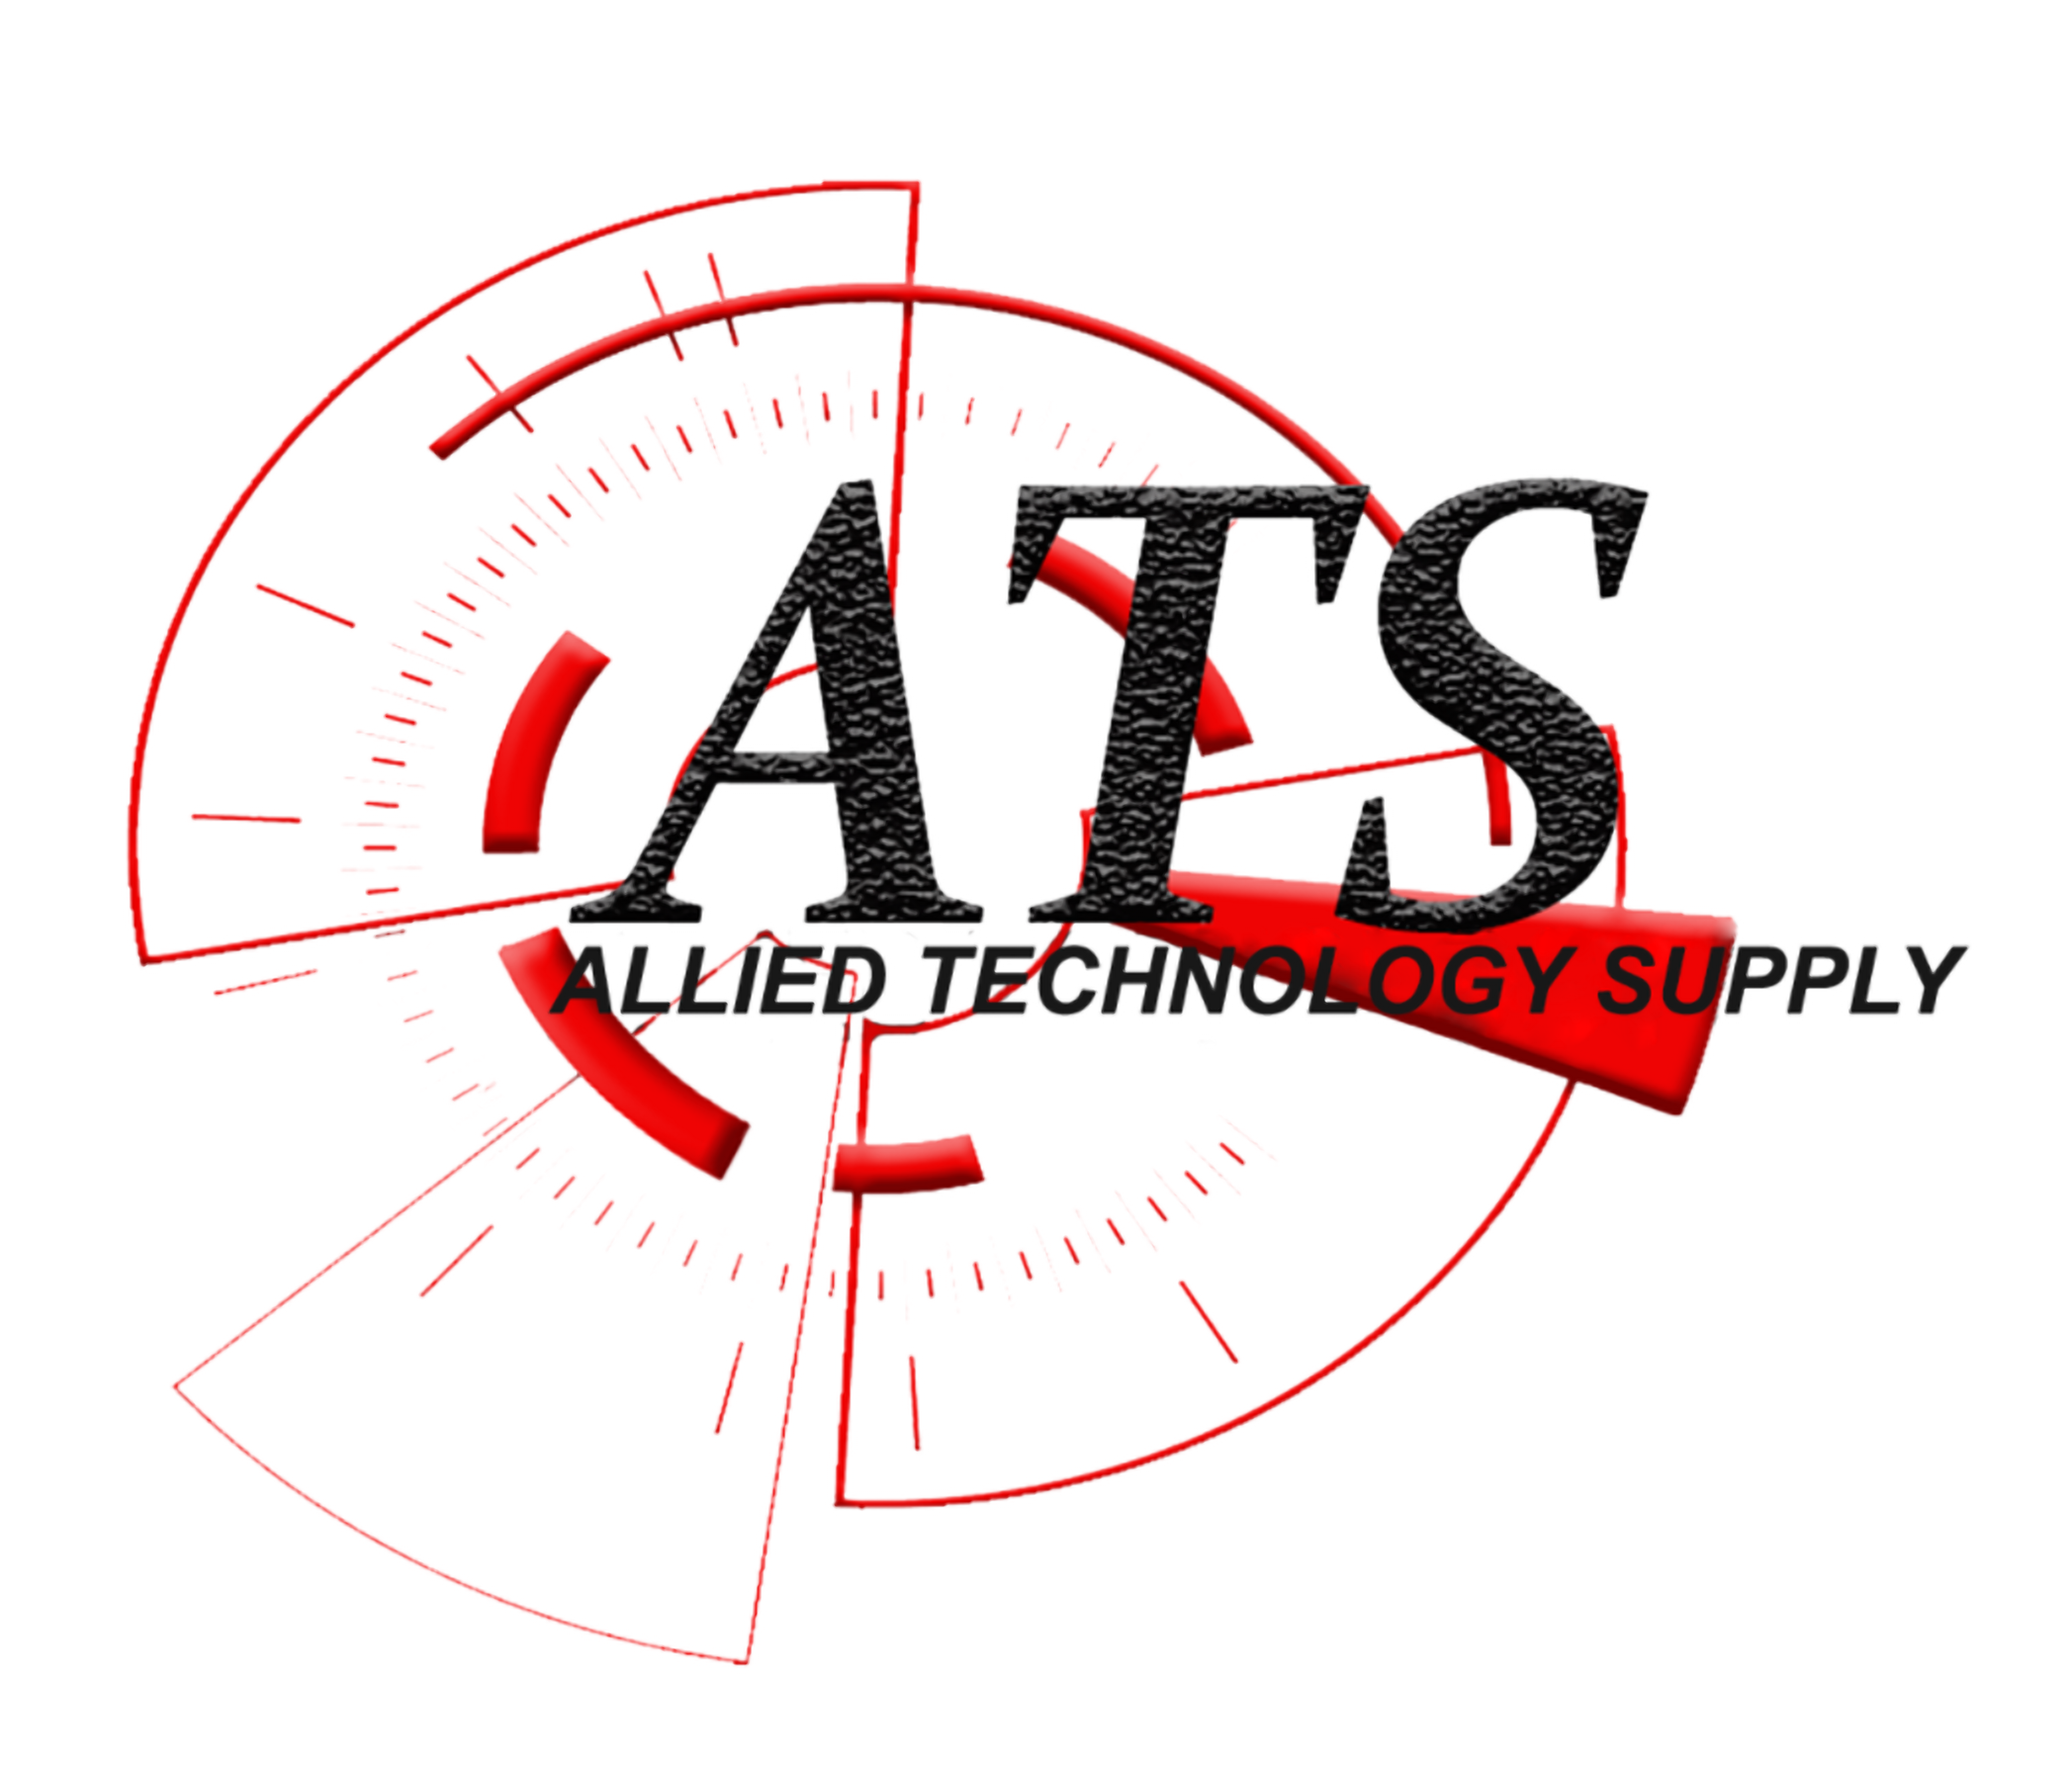 Allied Technology Supply logo